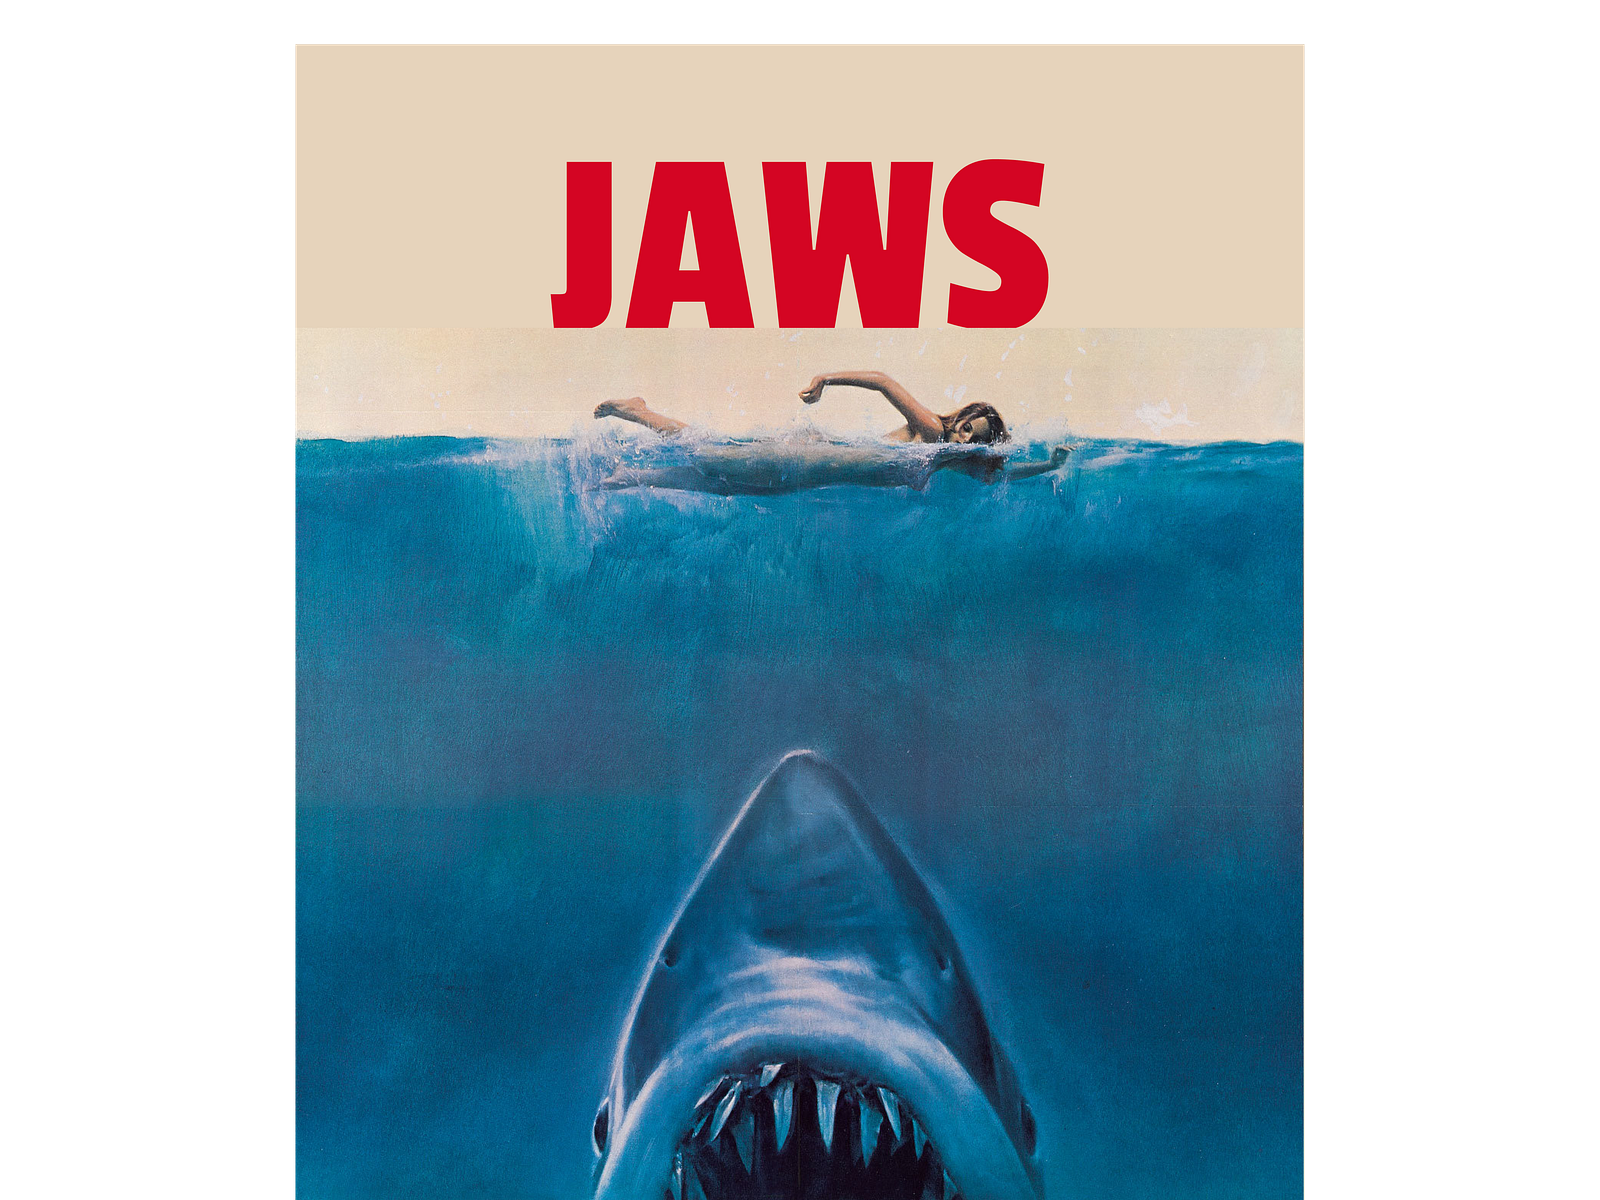 Jaws- Movie Poster by Kaushiki Garg on Dribbble